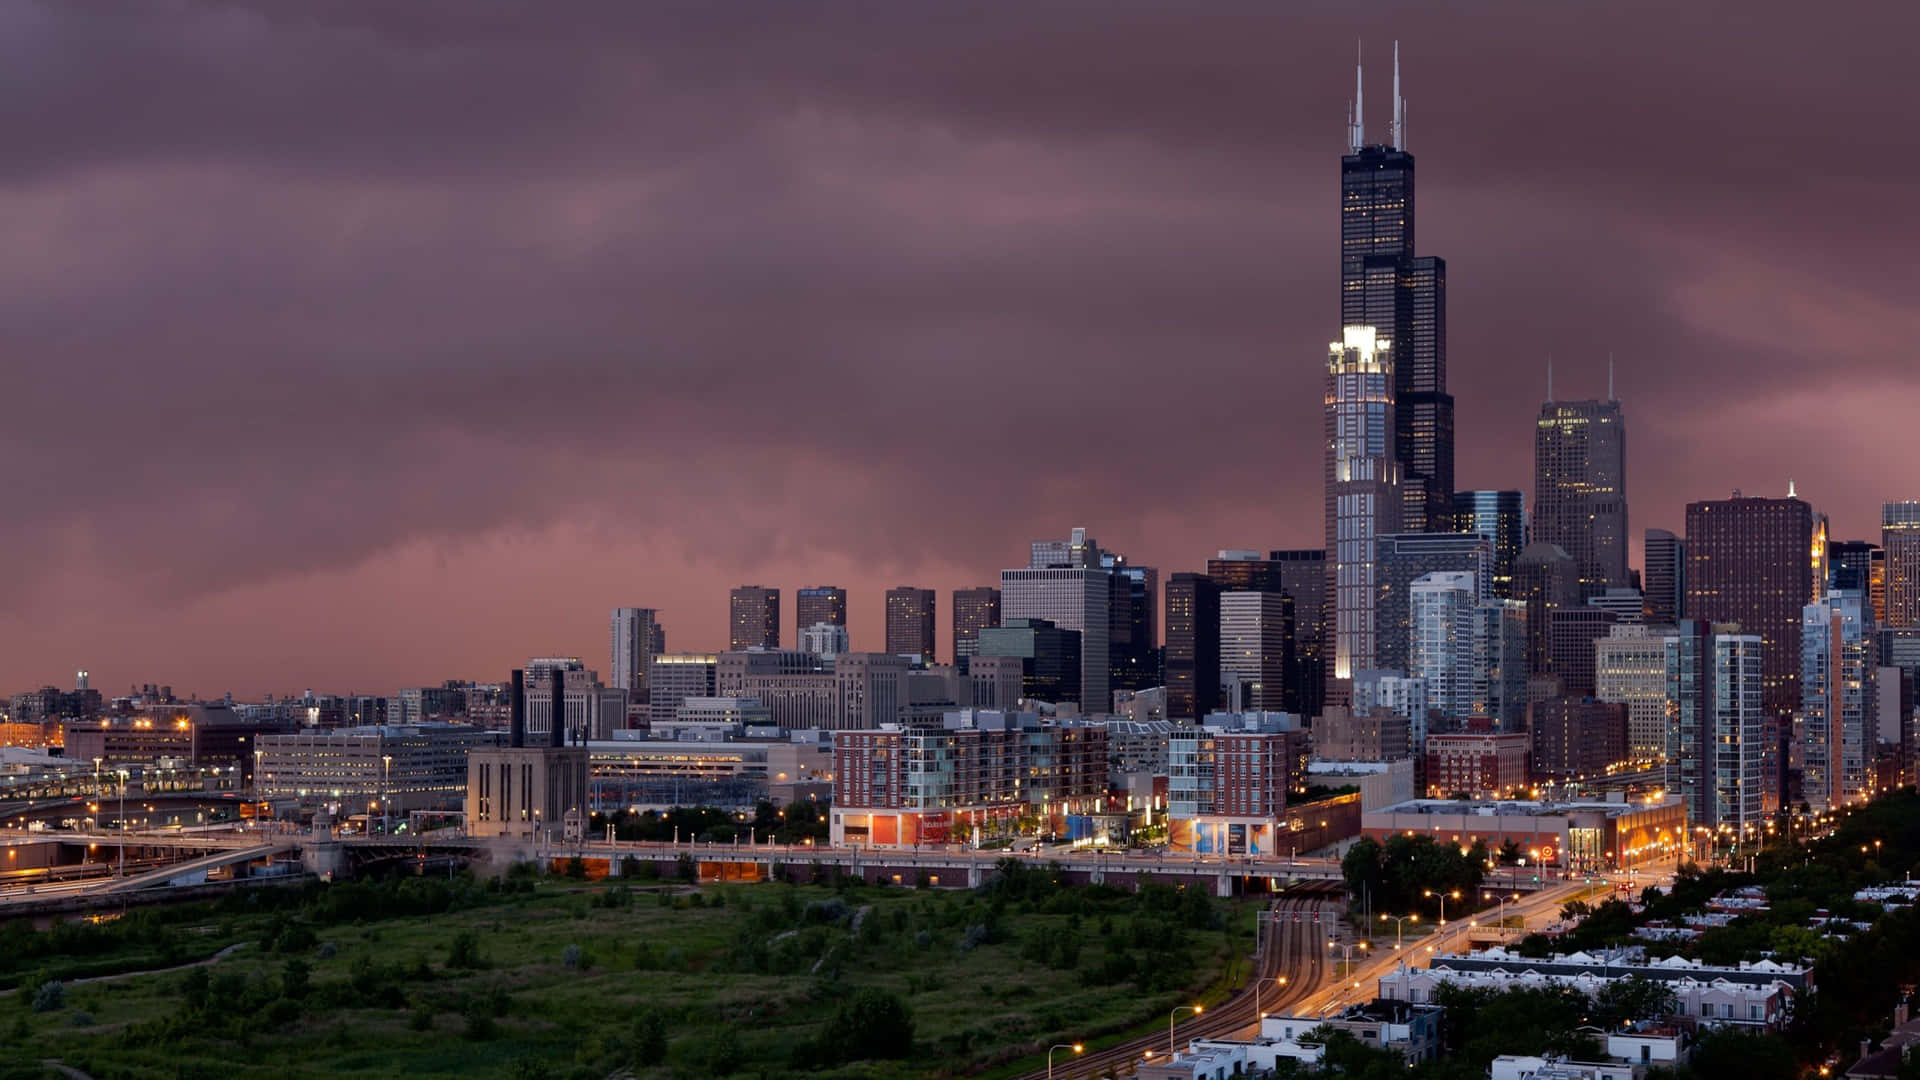 Enjoy beautiful views of Chicago's skyline